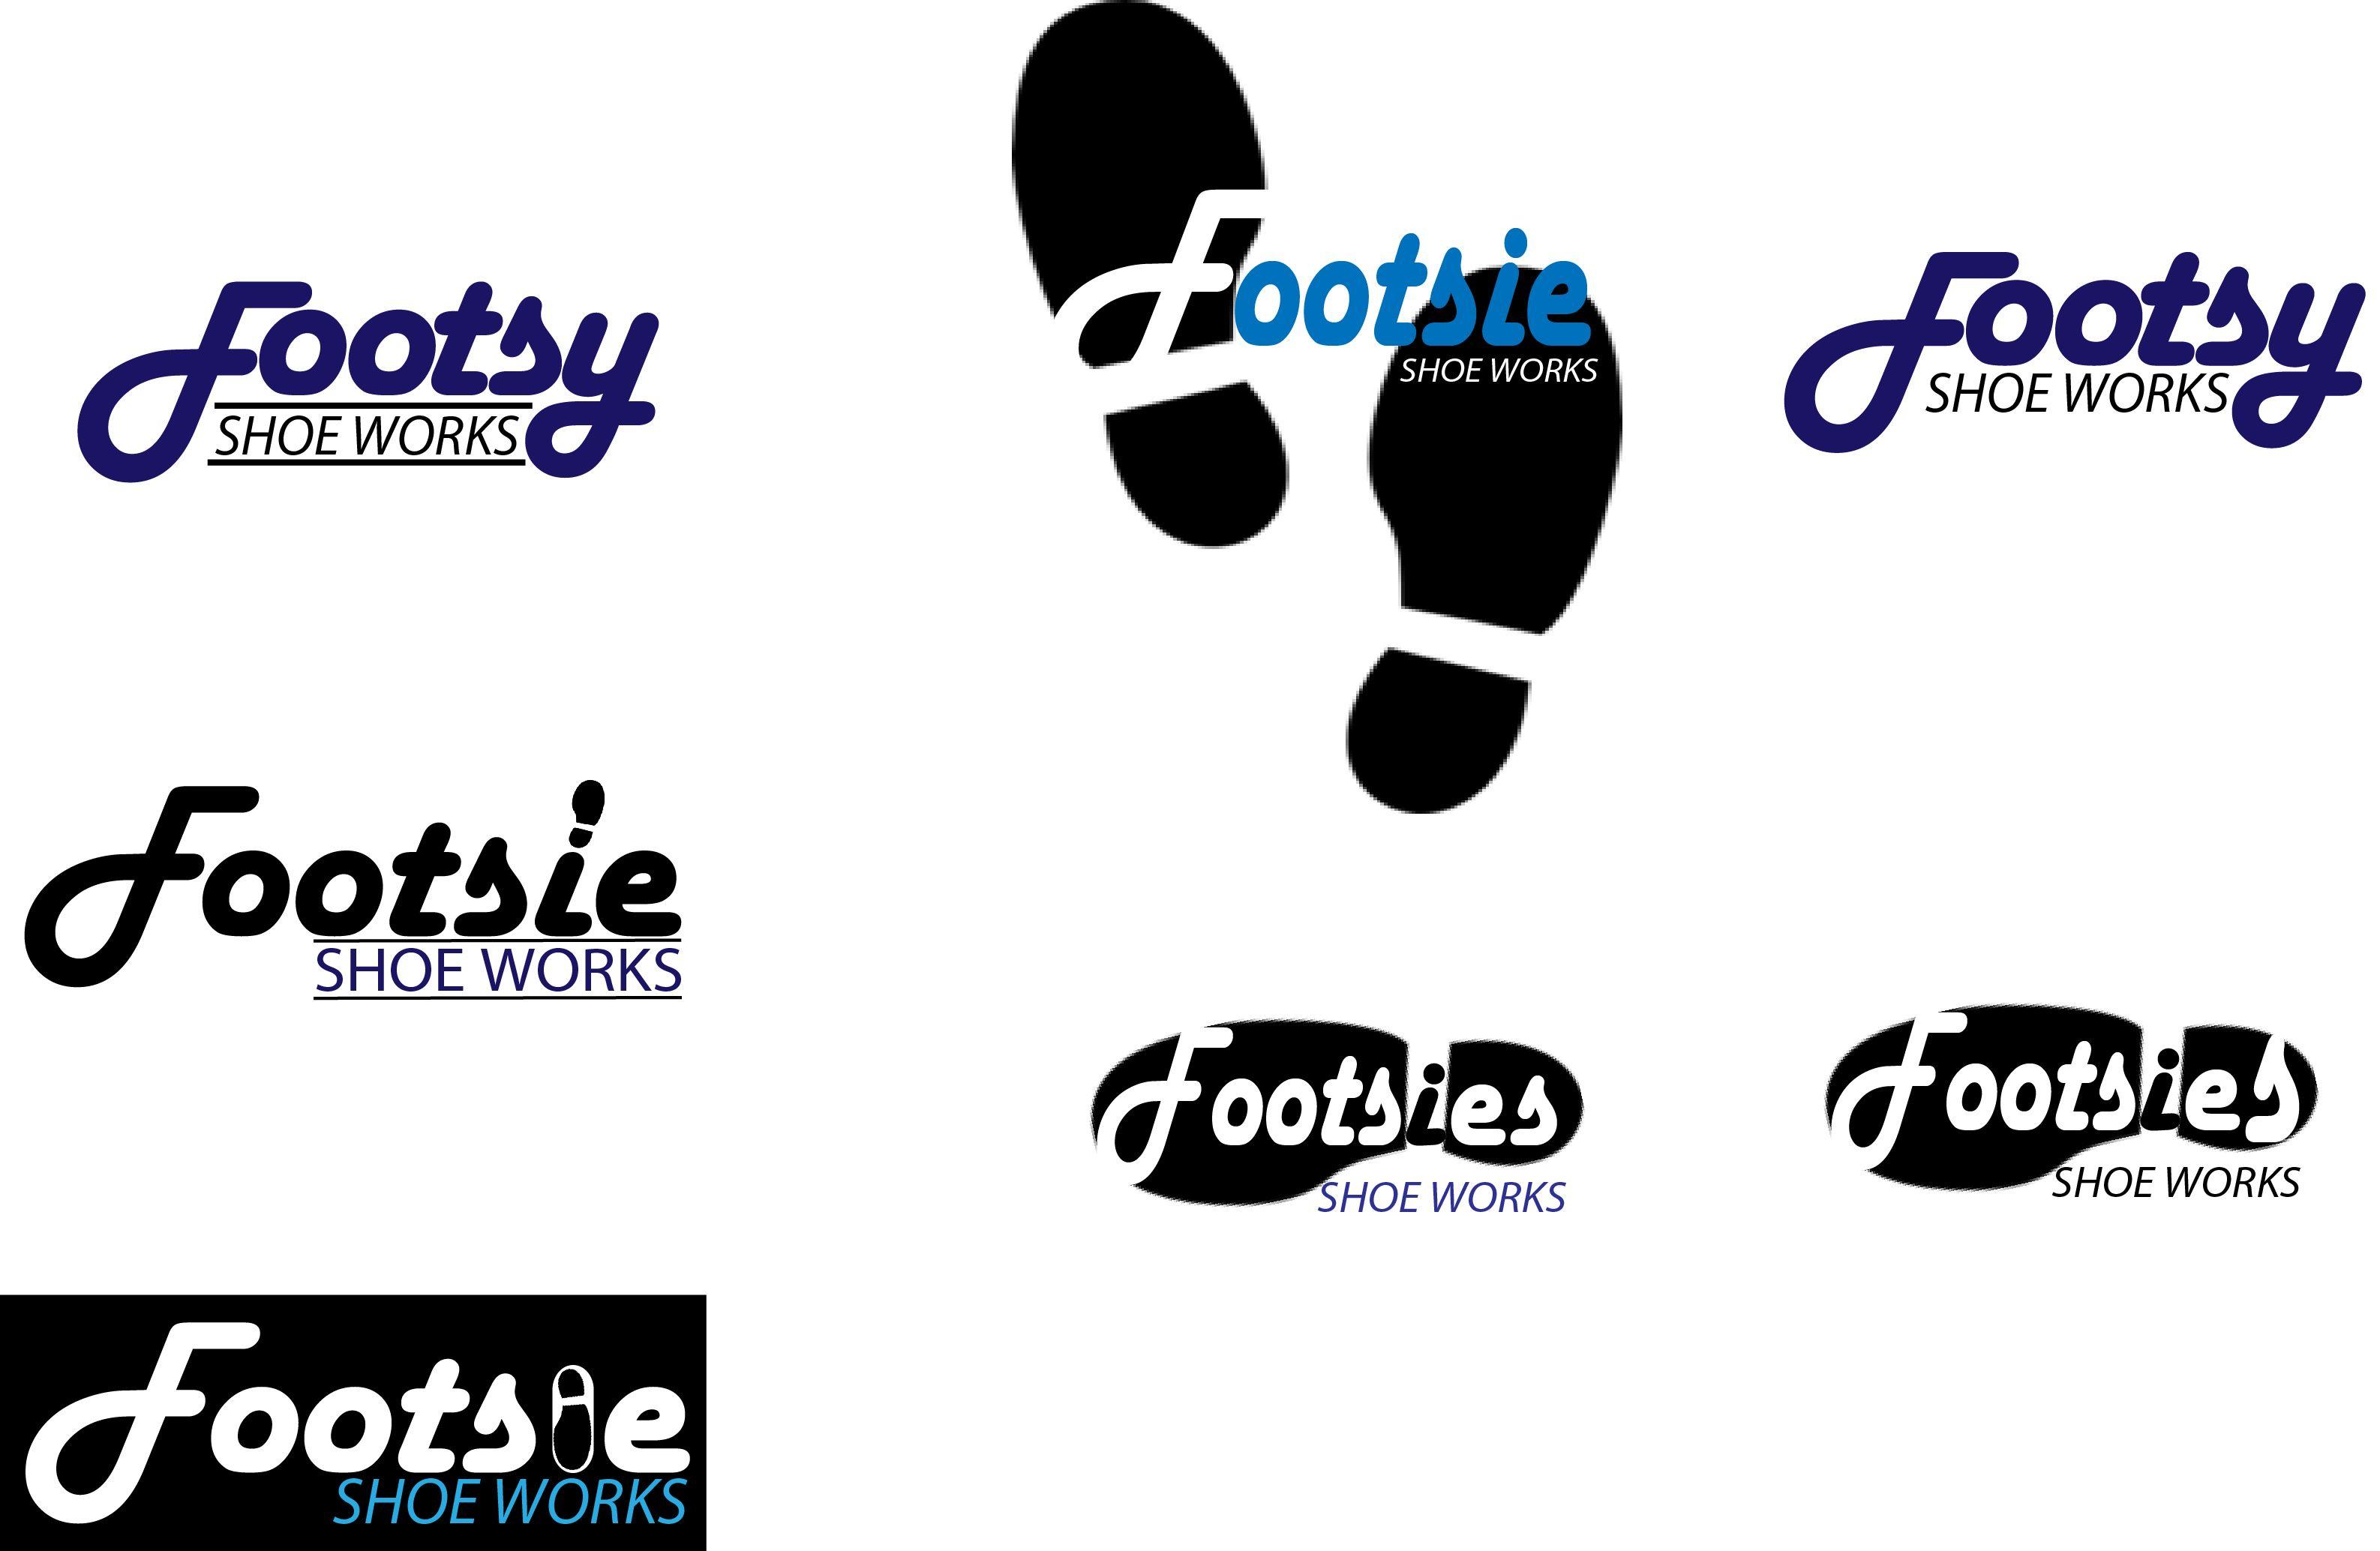 American Shoe Company Logo - Footsie Shoe logos. | Fliss93